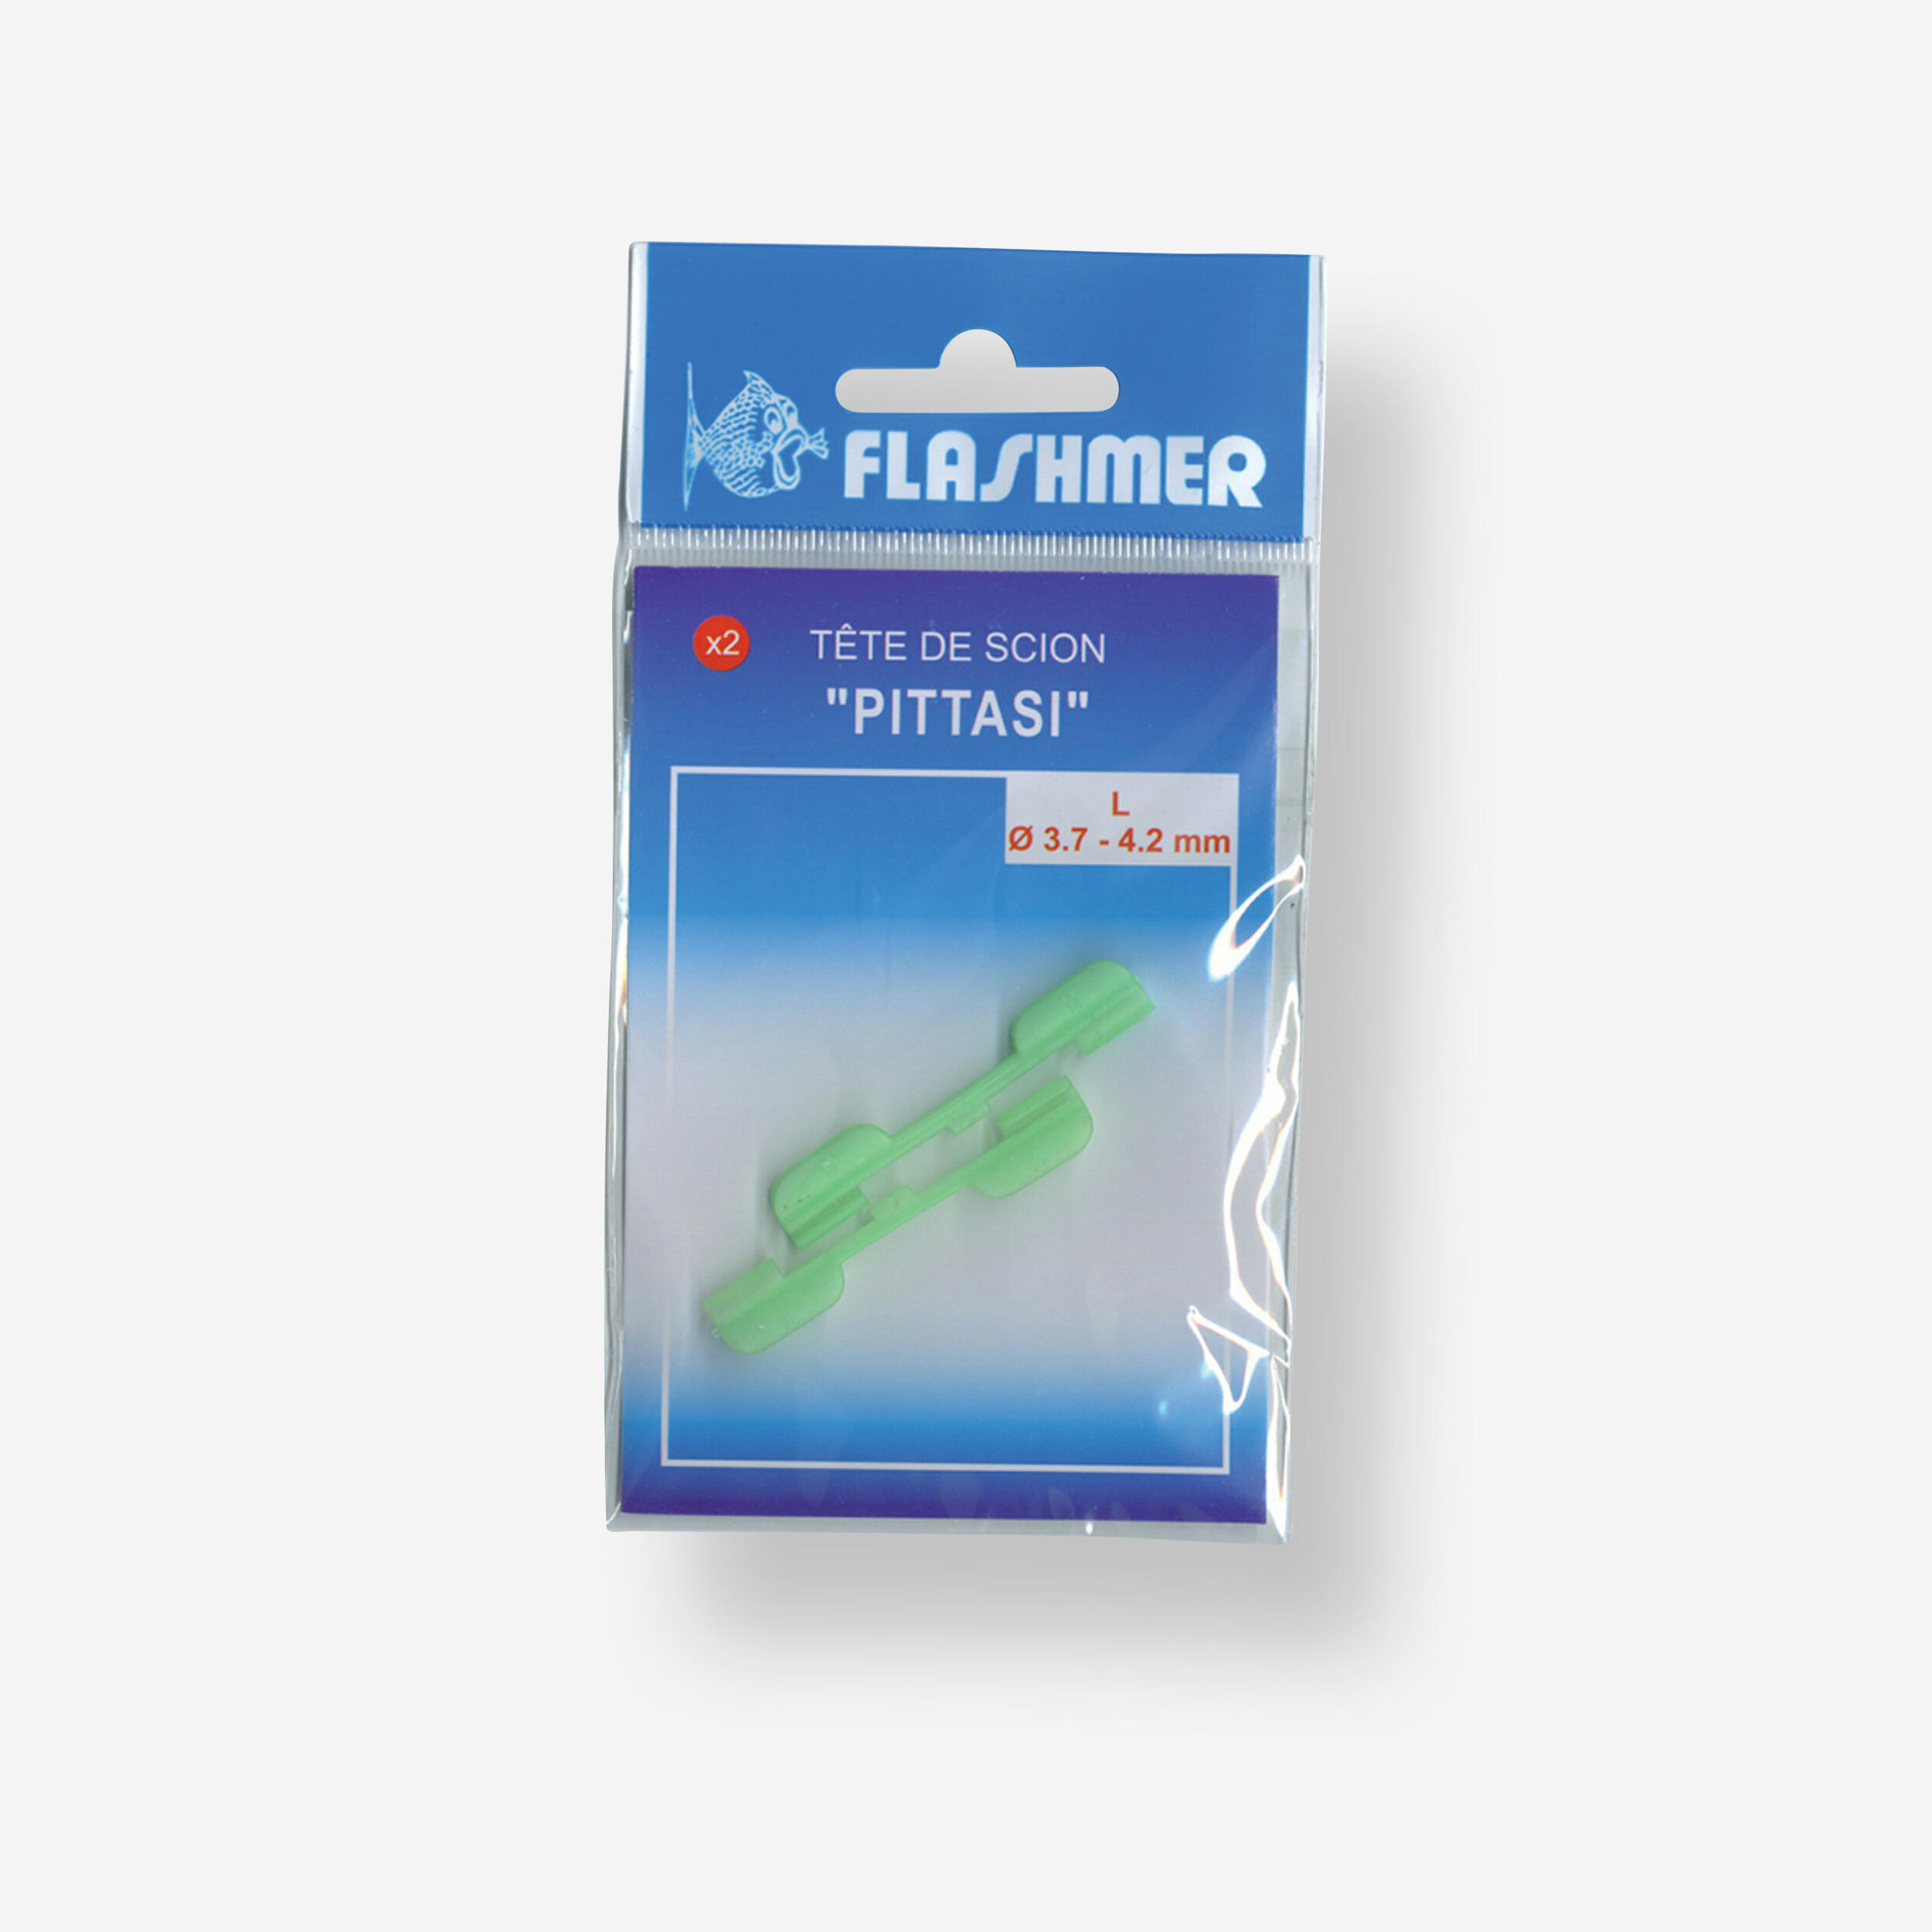 FLASHMER PITTASI LL rod tip light stick holder